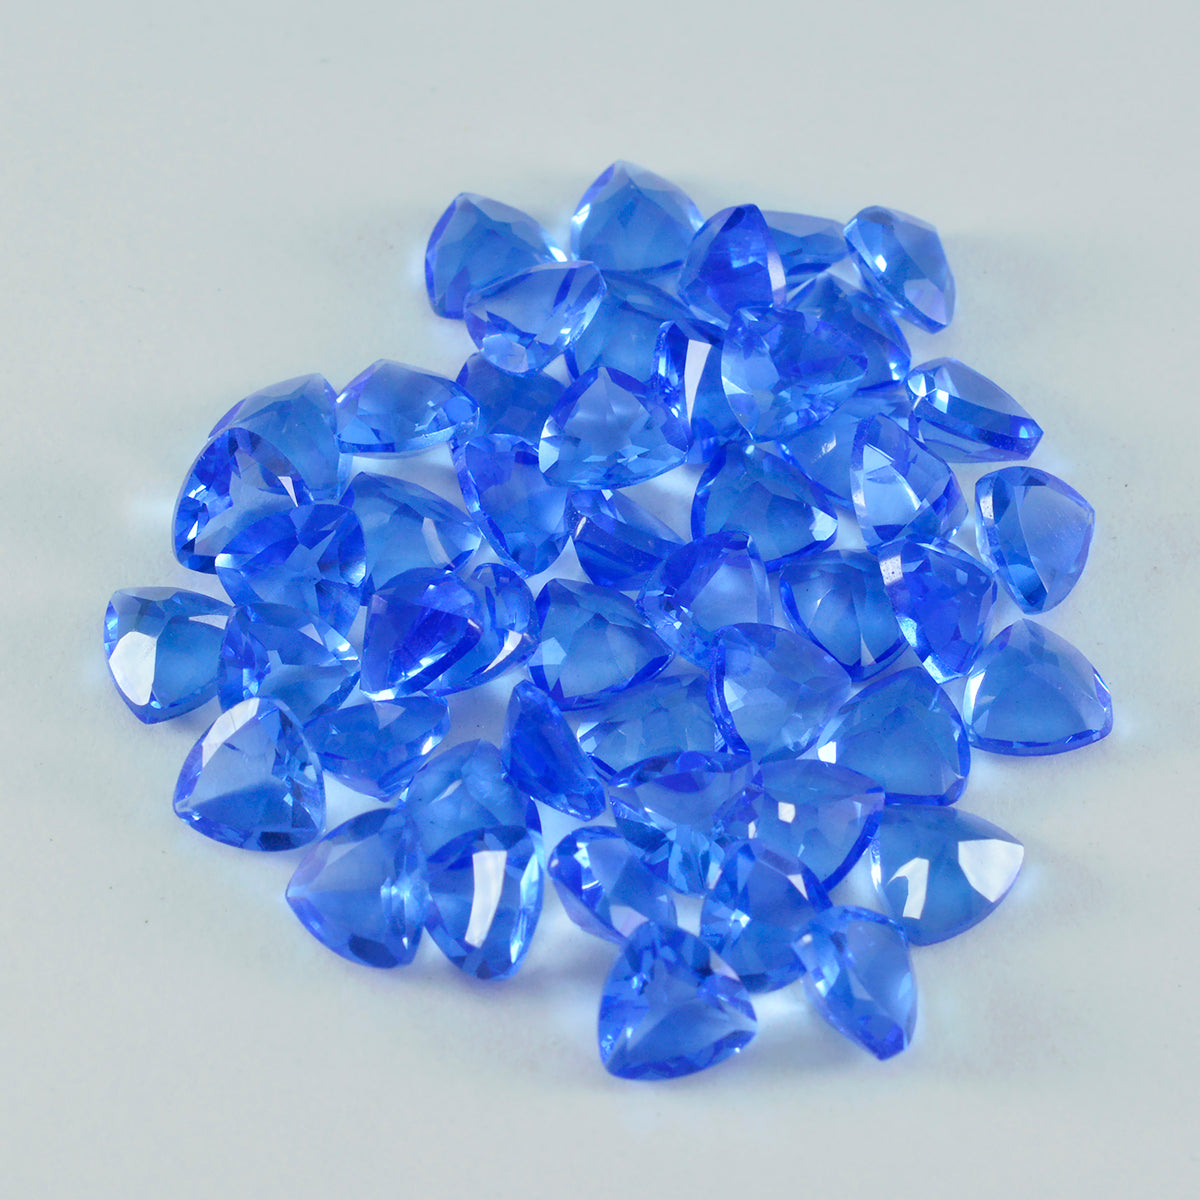 Riyogems 1PC Blue Sapphire CZ Faceted 7x7 mm Trillion Shape startling Quality Loose Stone